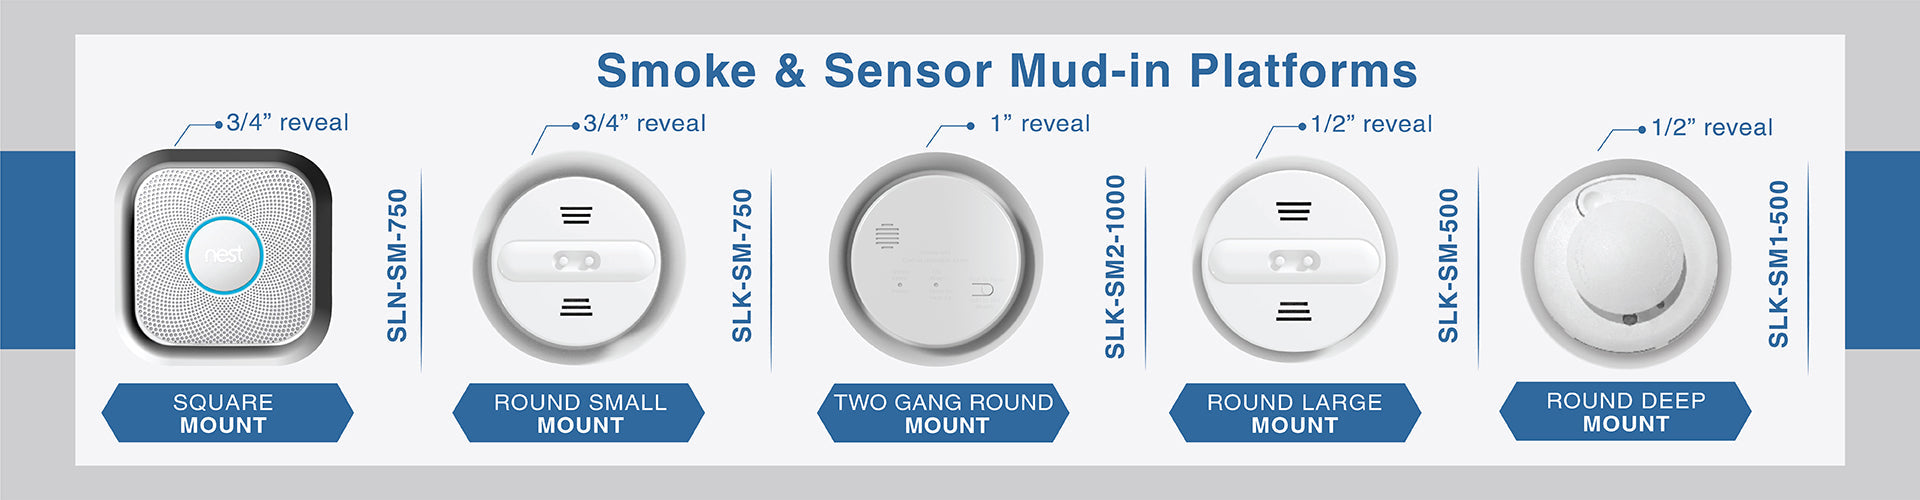 Smoke & Sensor Mounts